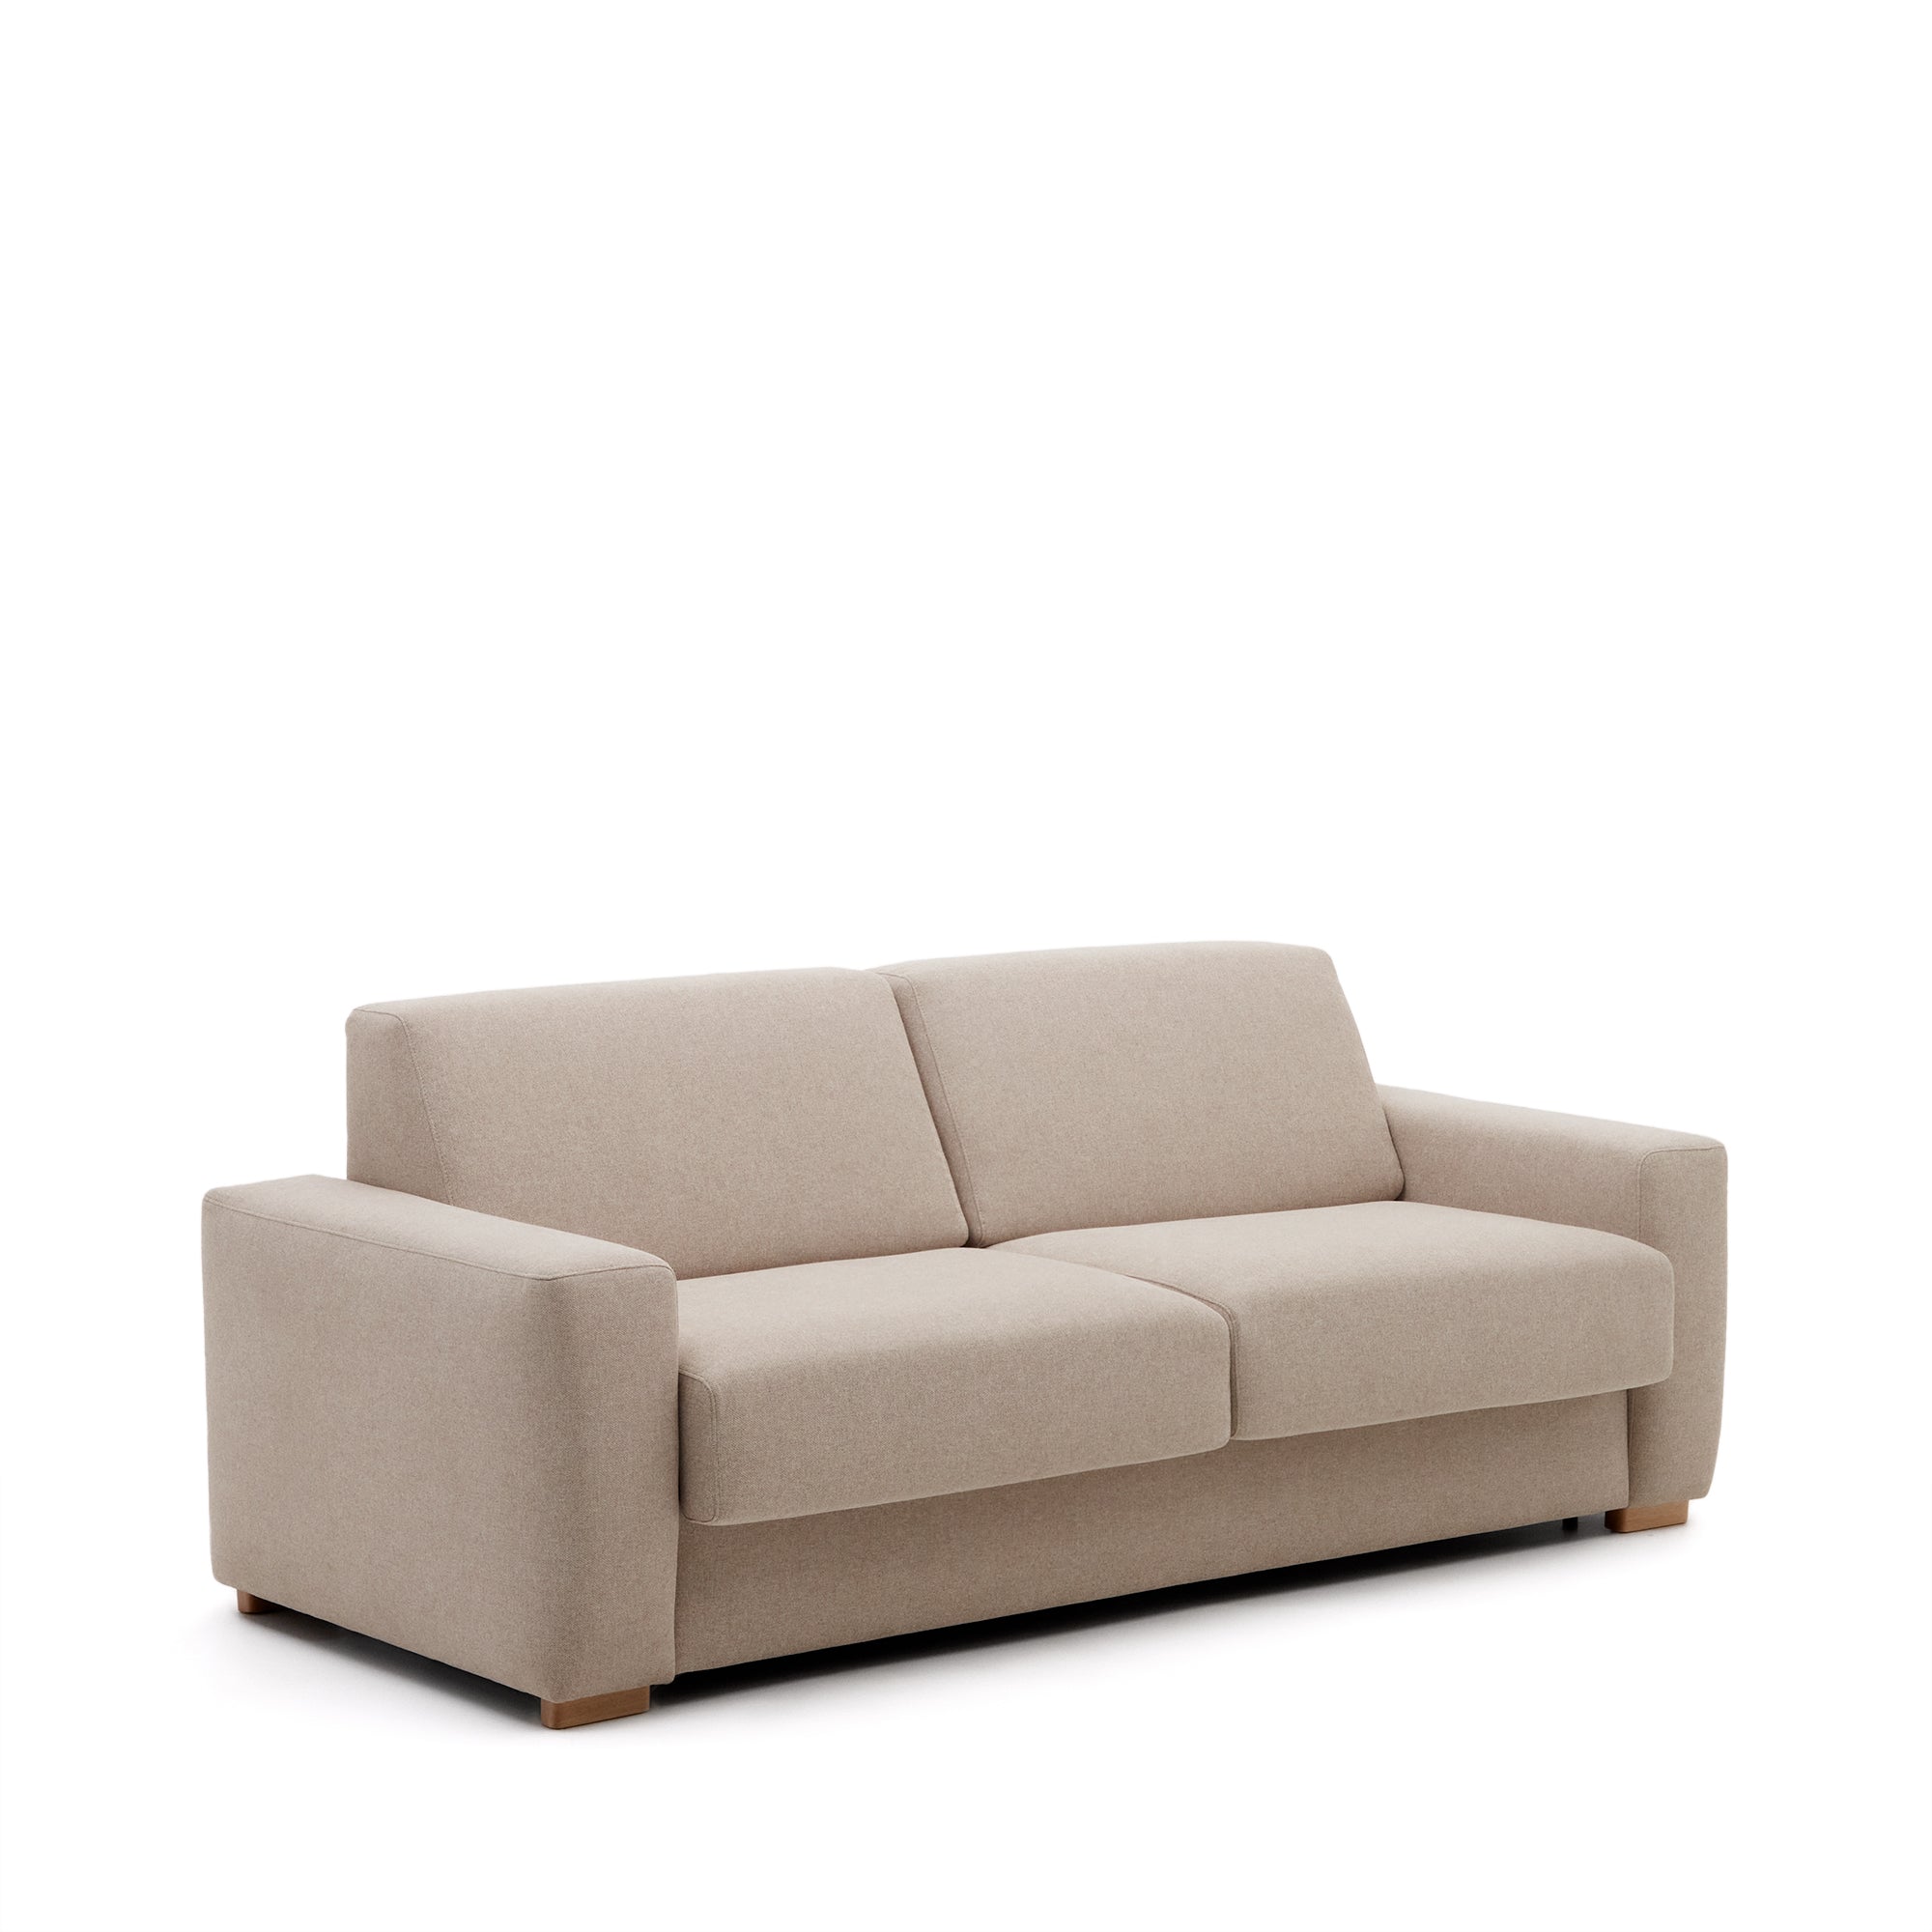 Anley 3-seater sofa bed in beige 224 cm